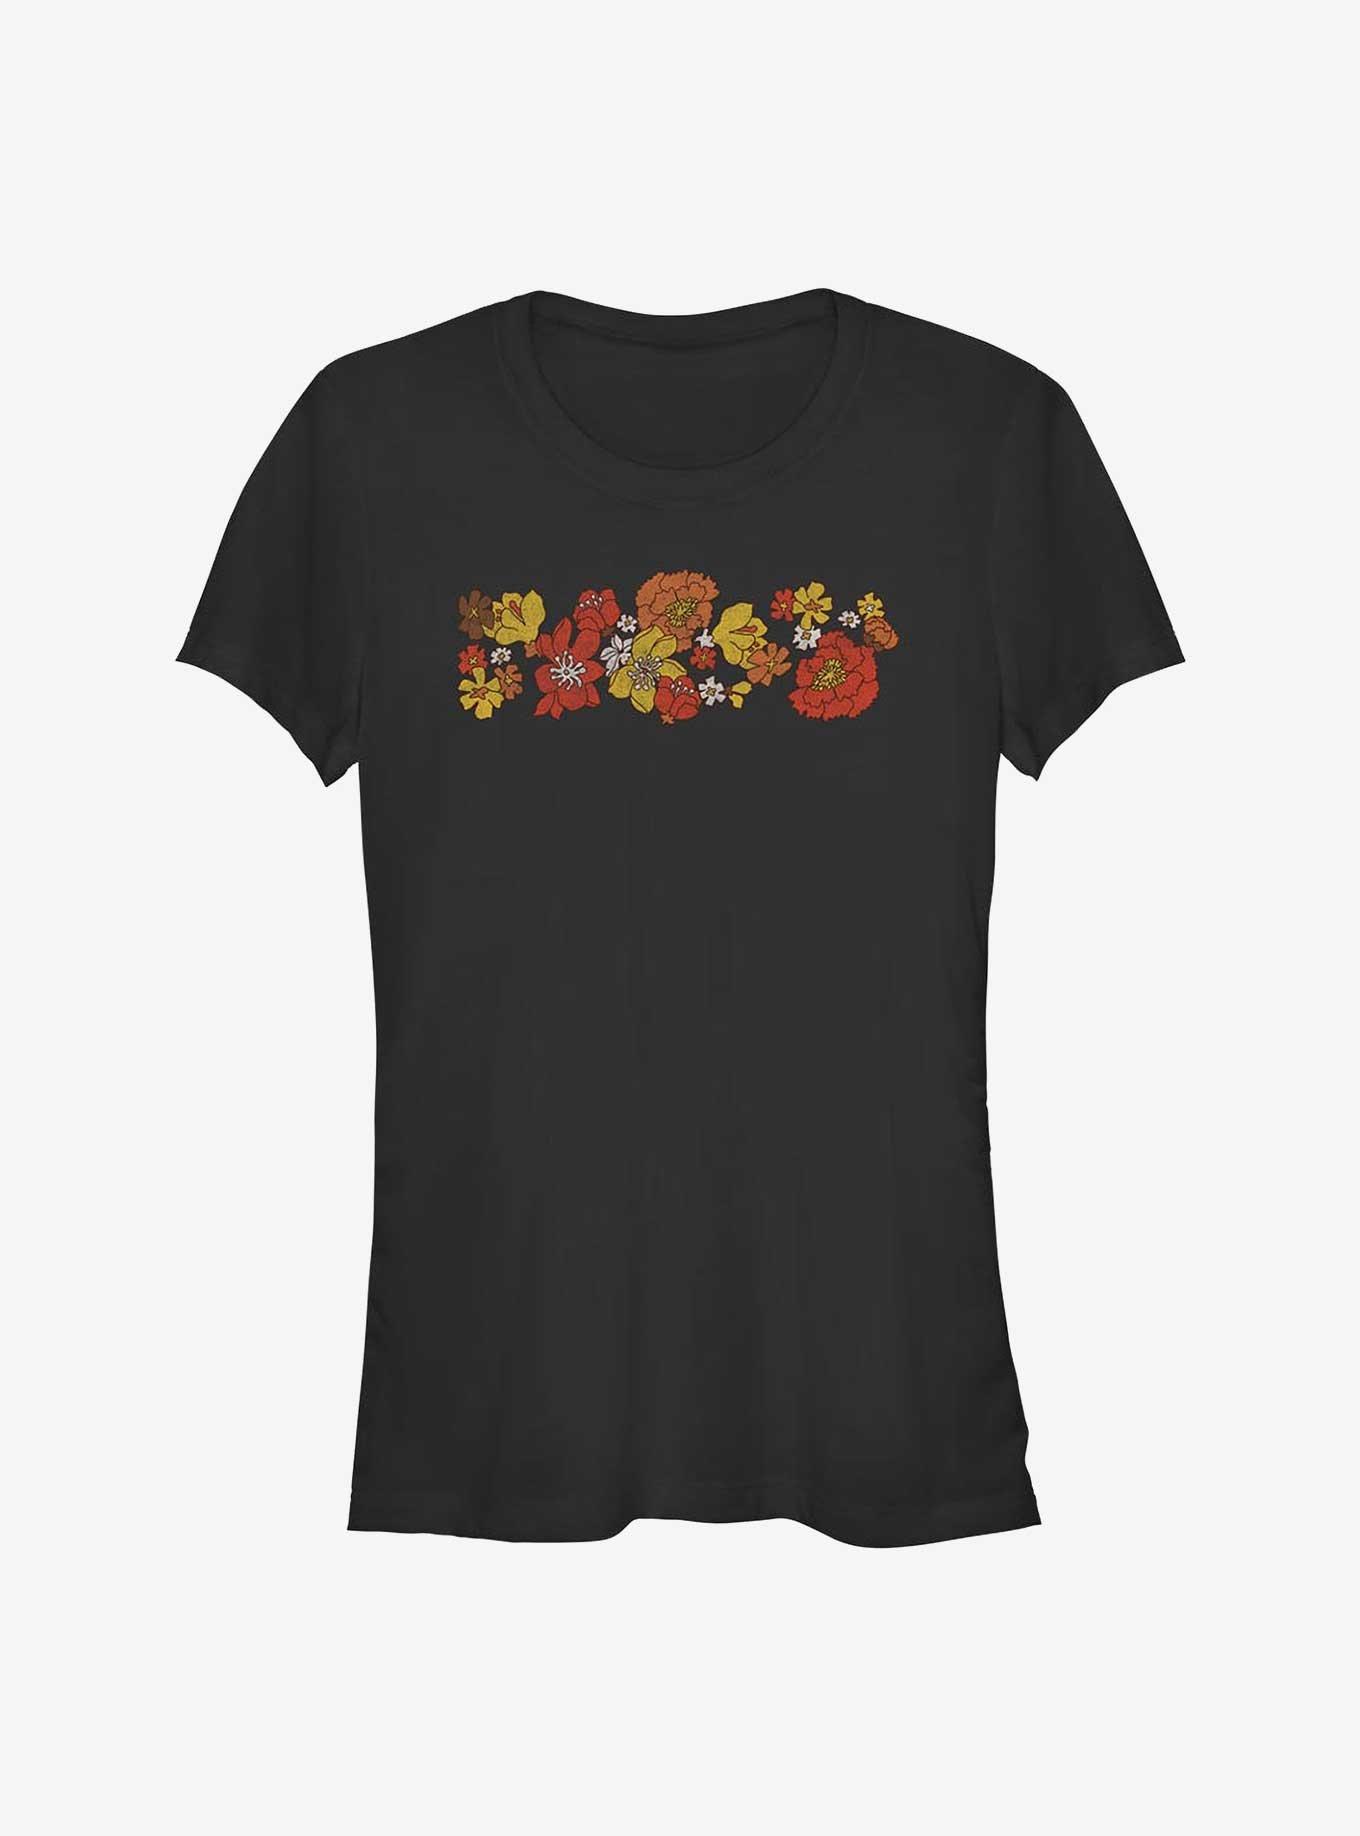 Retro Floral Girls T-Shirt